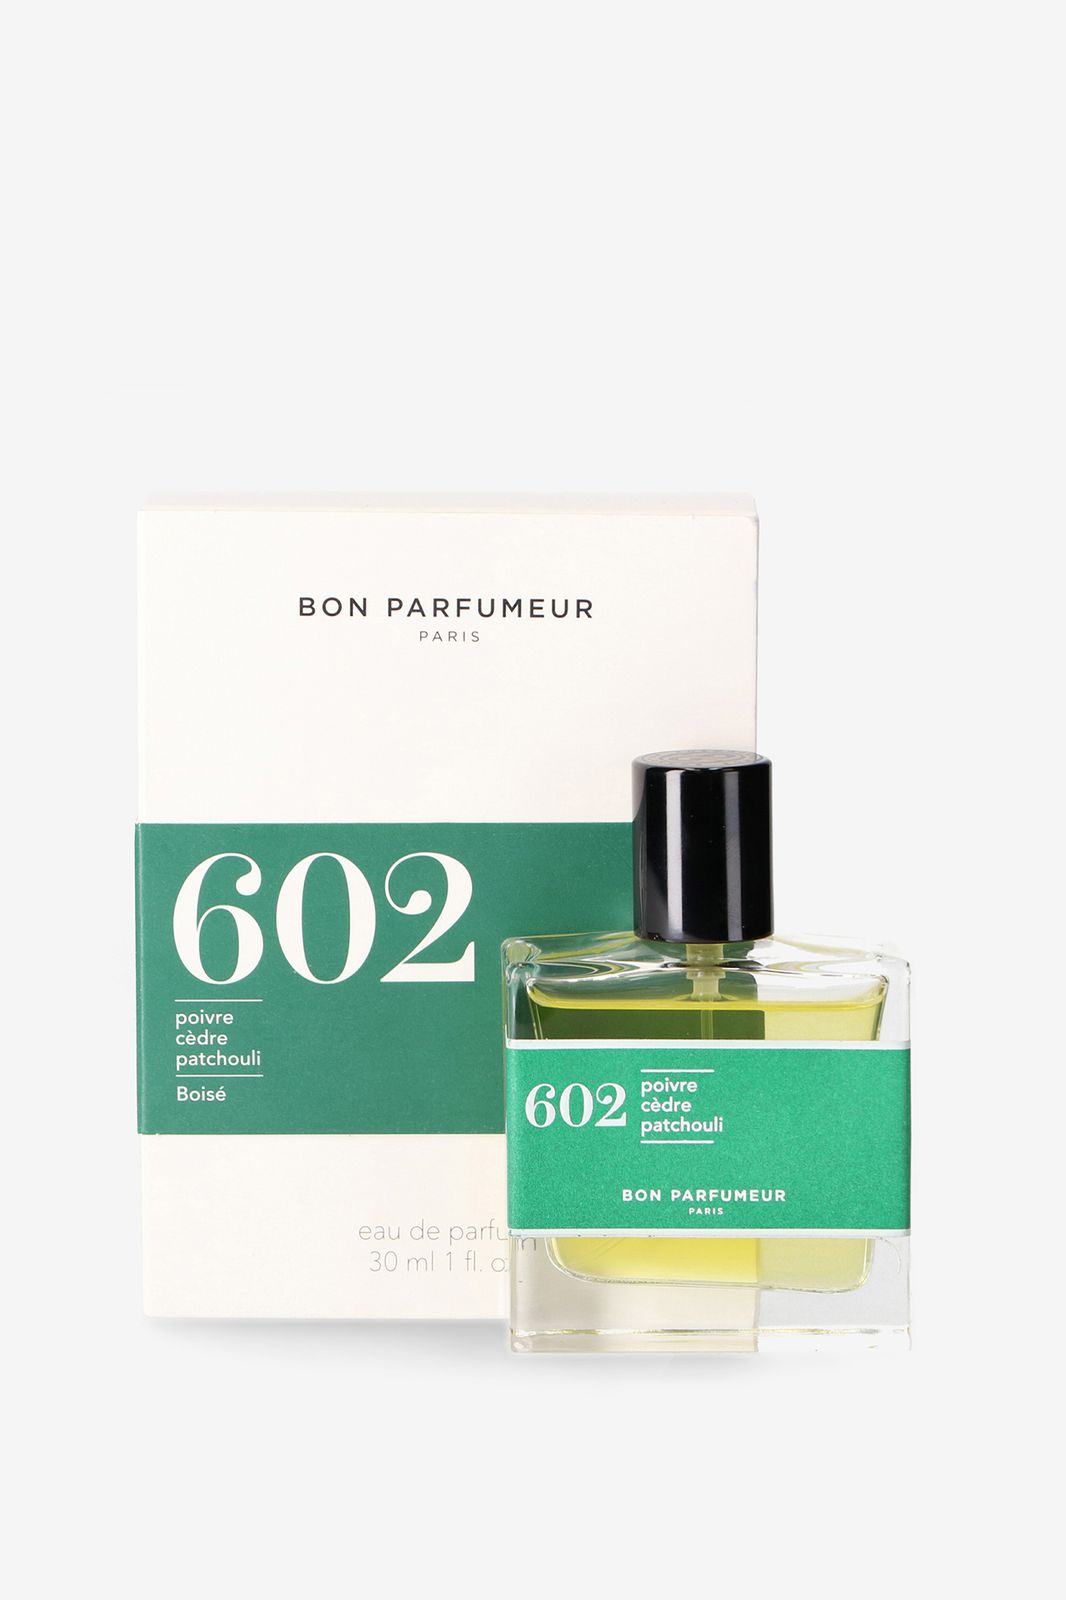 Bon parfumeur 602: pepper / cedar / patchouli